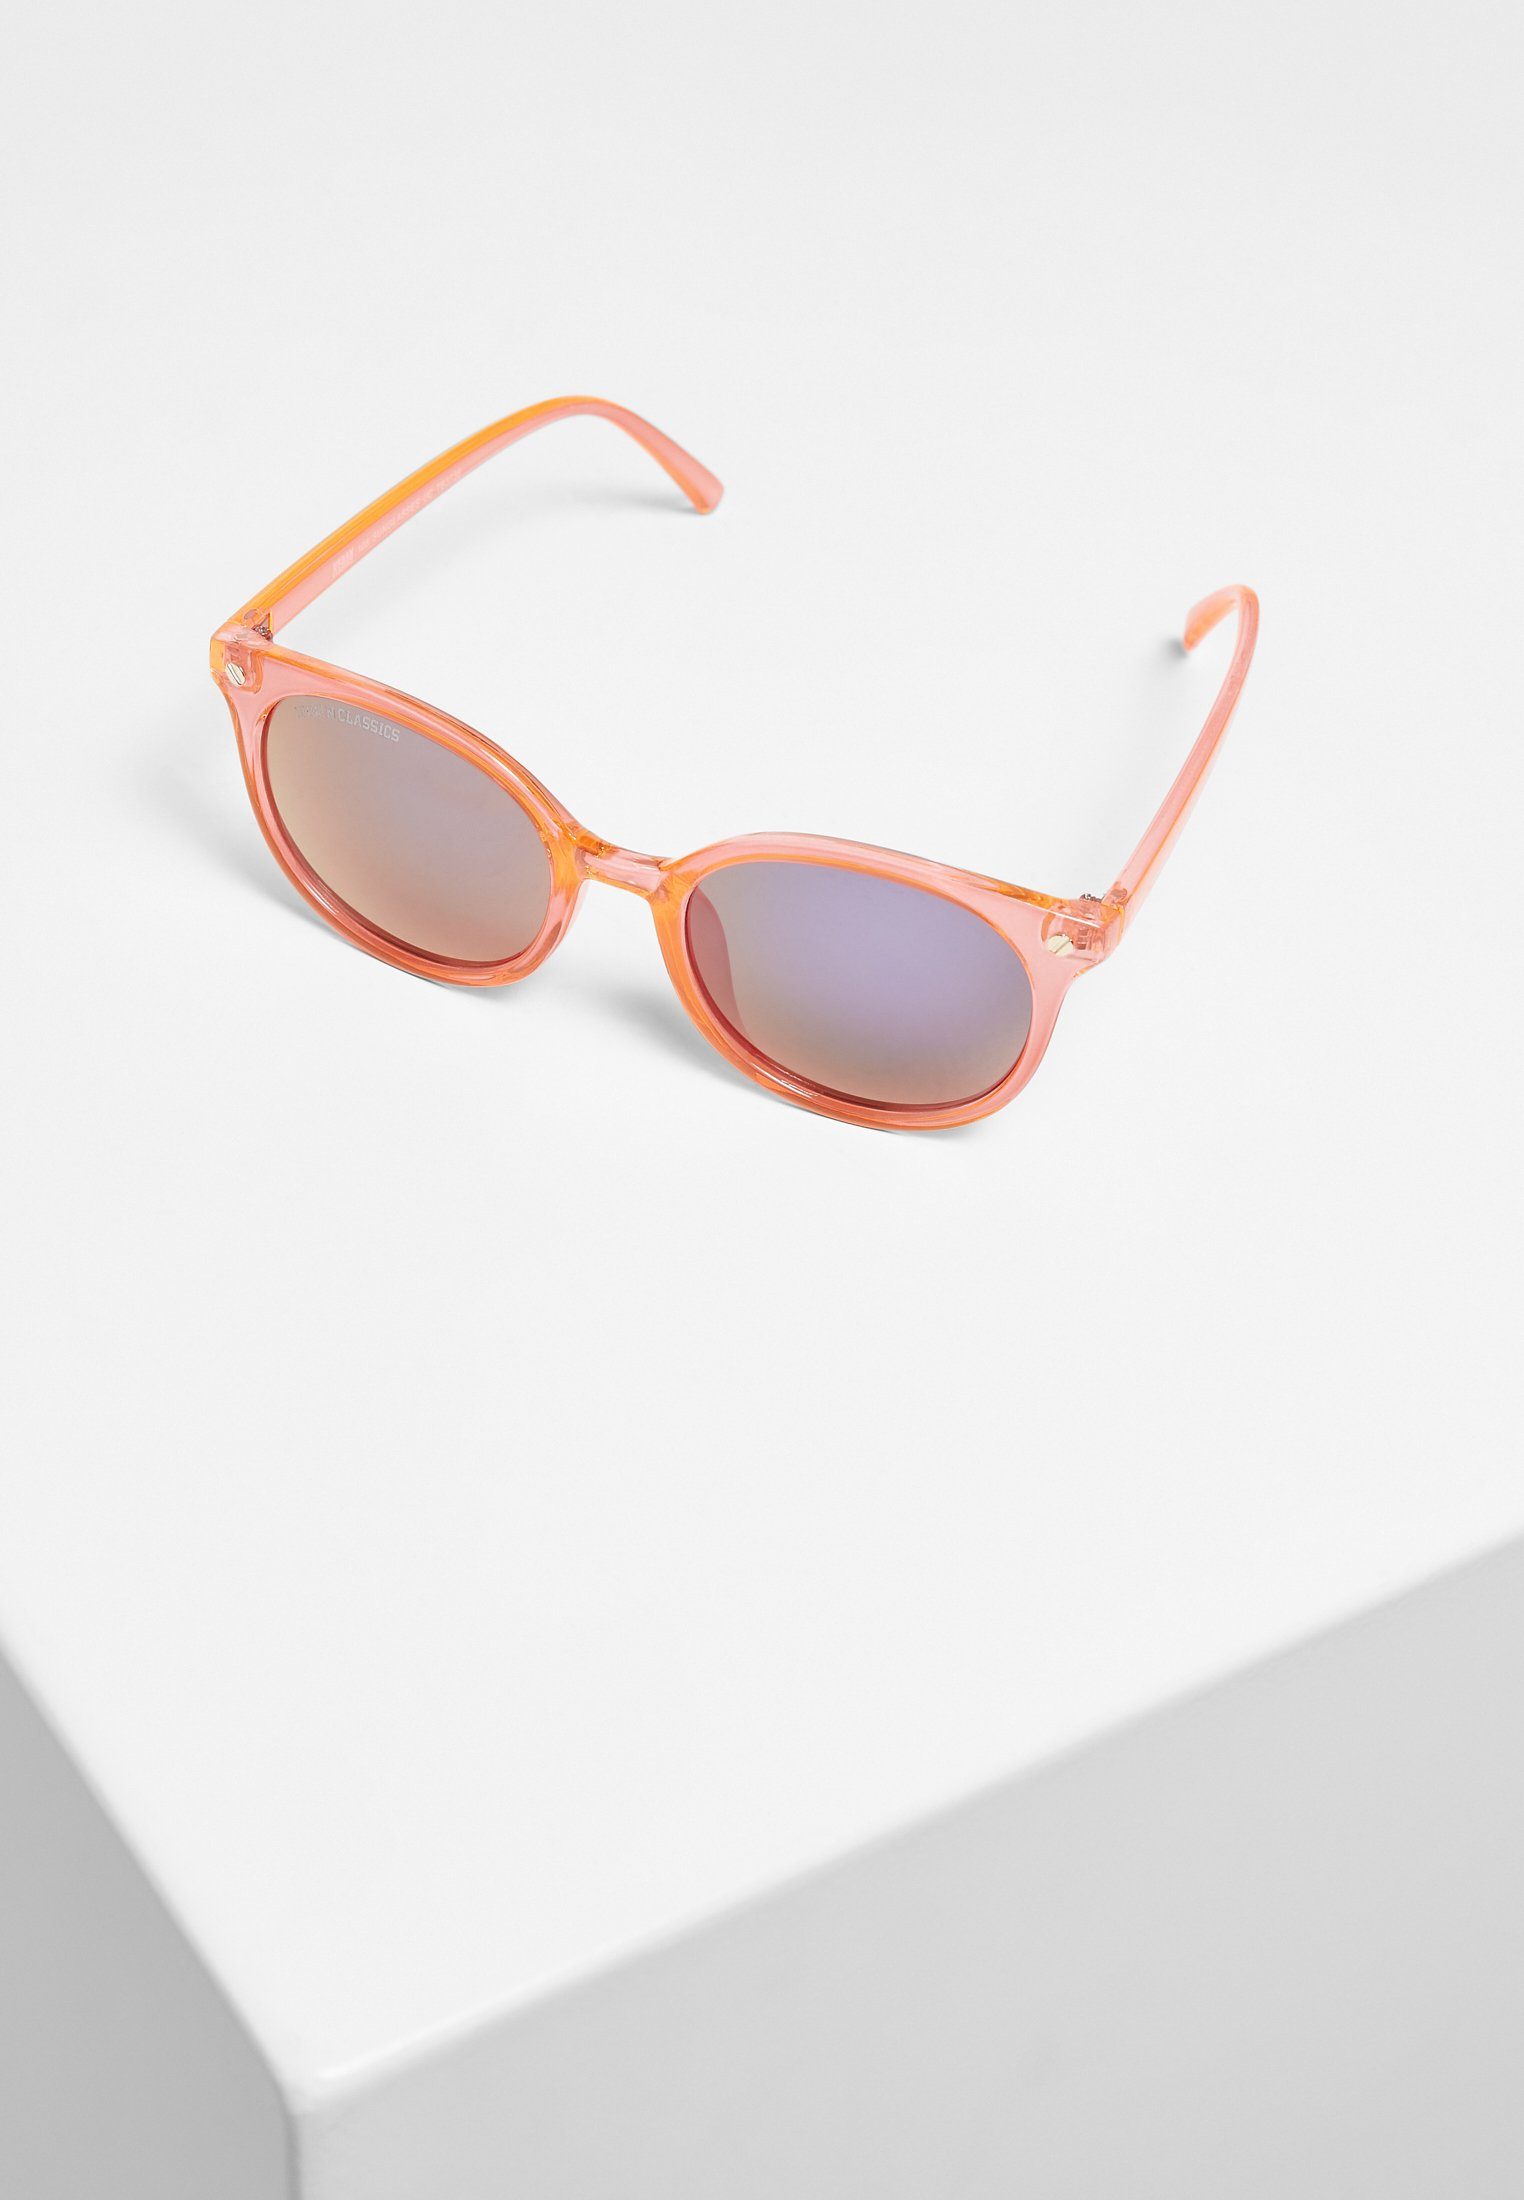 URBAN CLASSICS Sonnenbrille Accessoires neonorange/black 108 Sunglasses UC